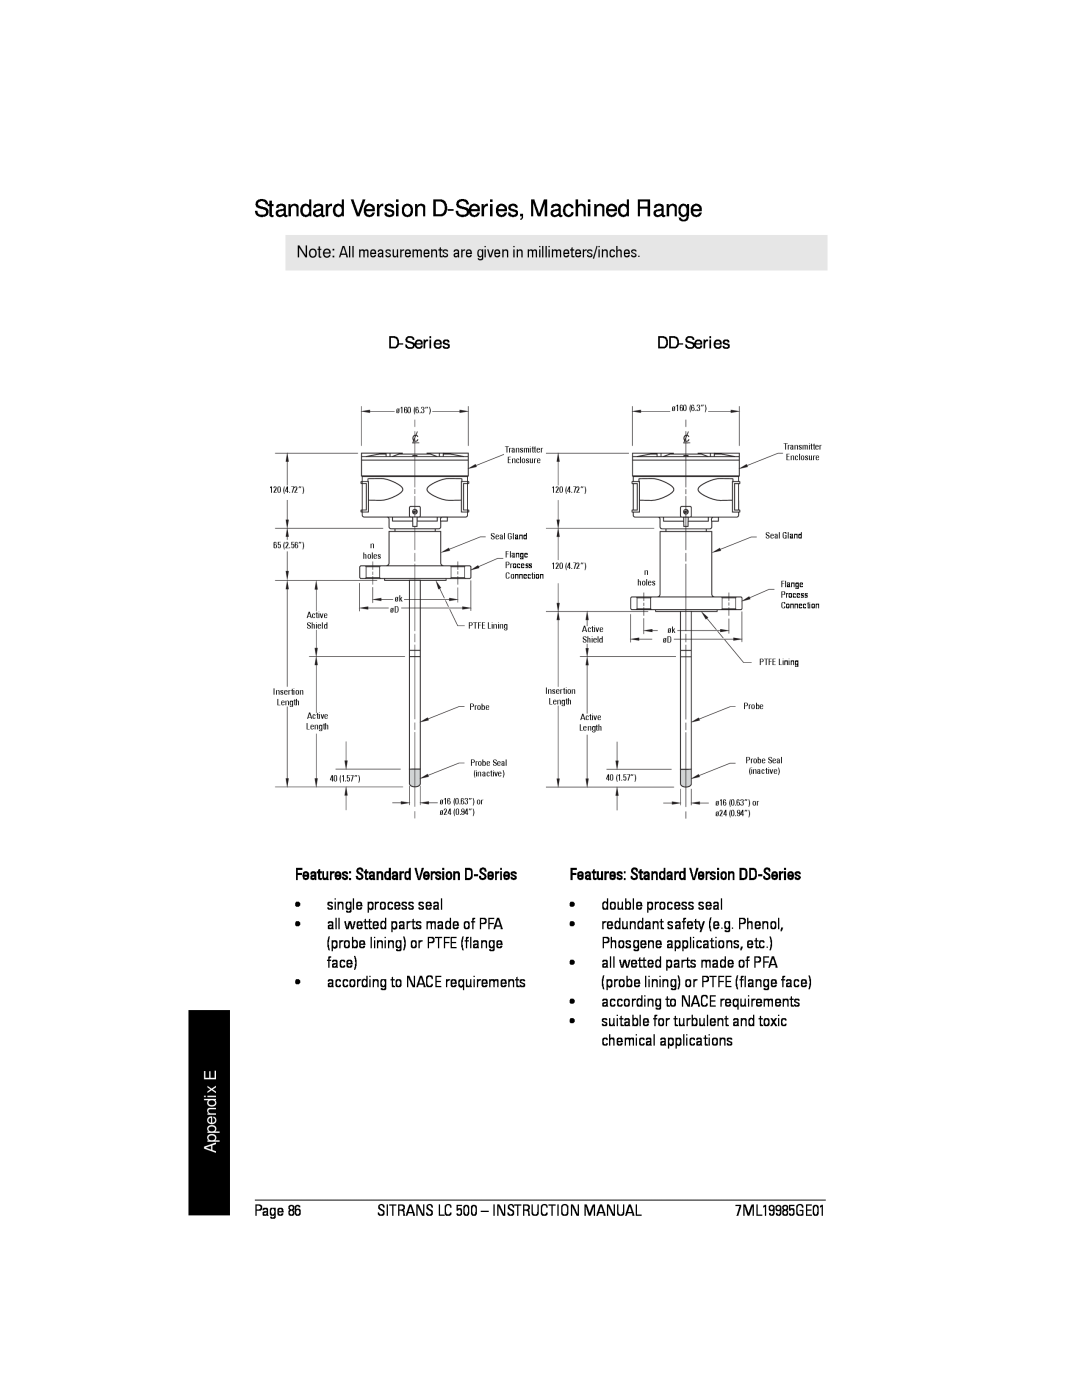 Siemens LC 500 Standard Version D-Series, Machined Flange, Appendix E, DD-Series, Features Standard Version D-Series 